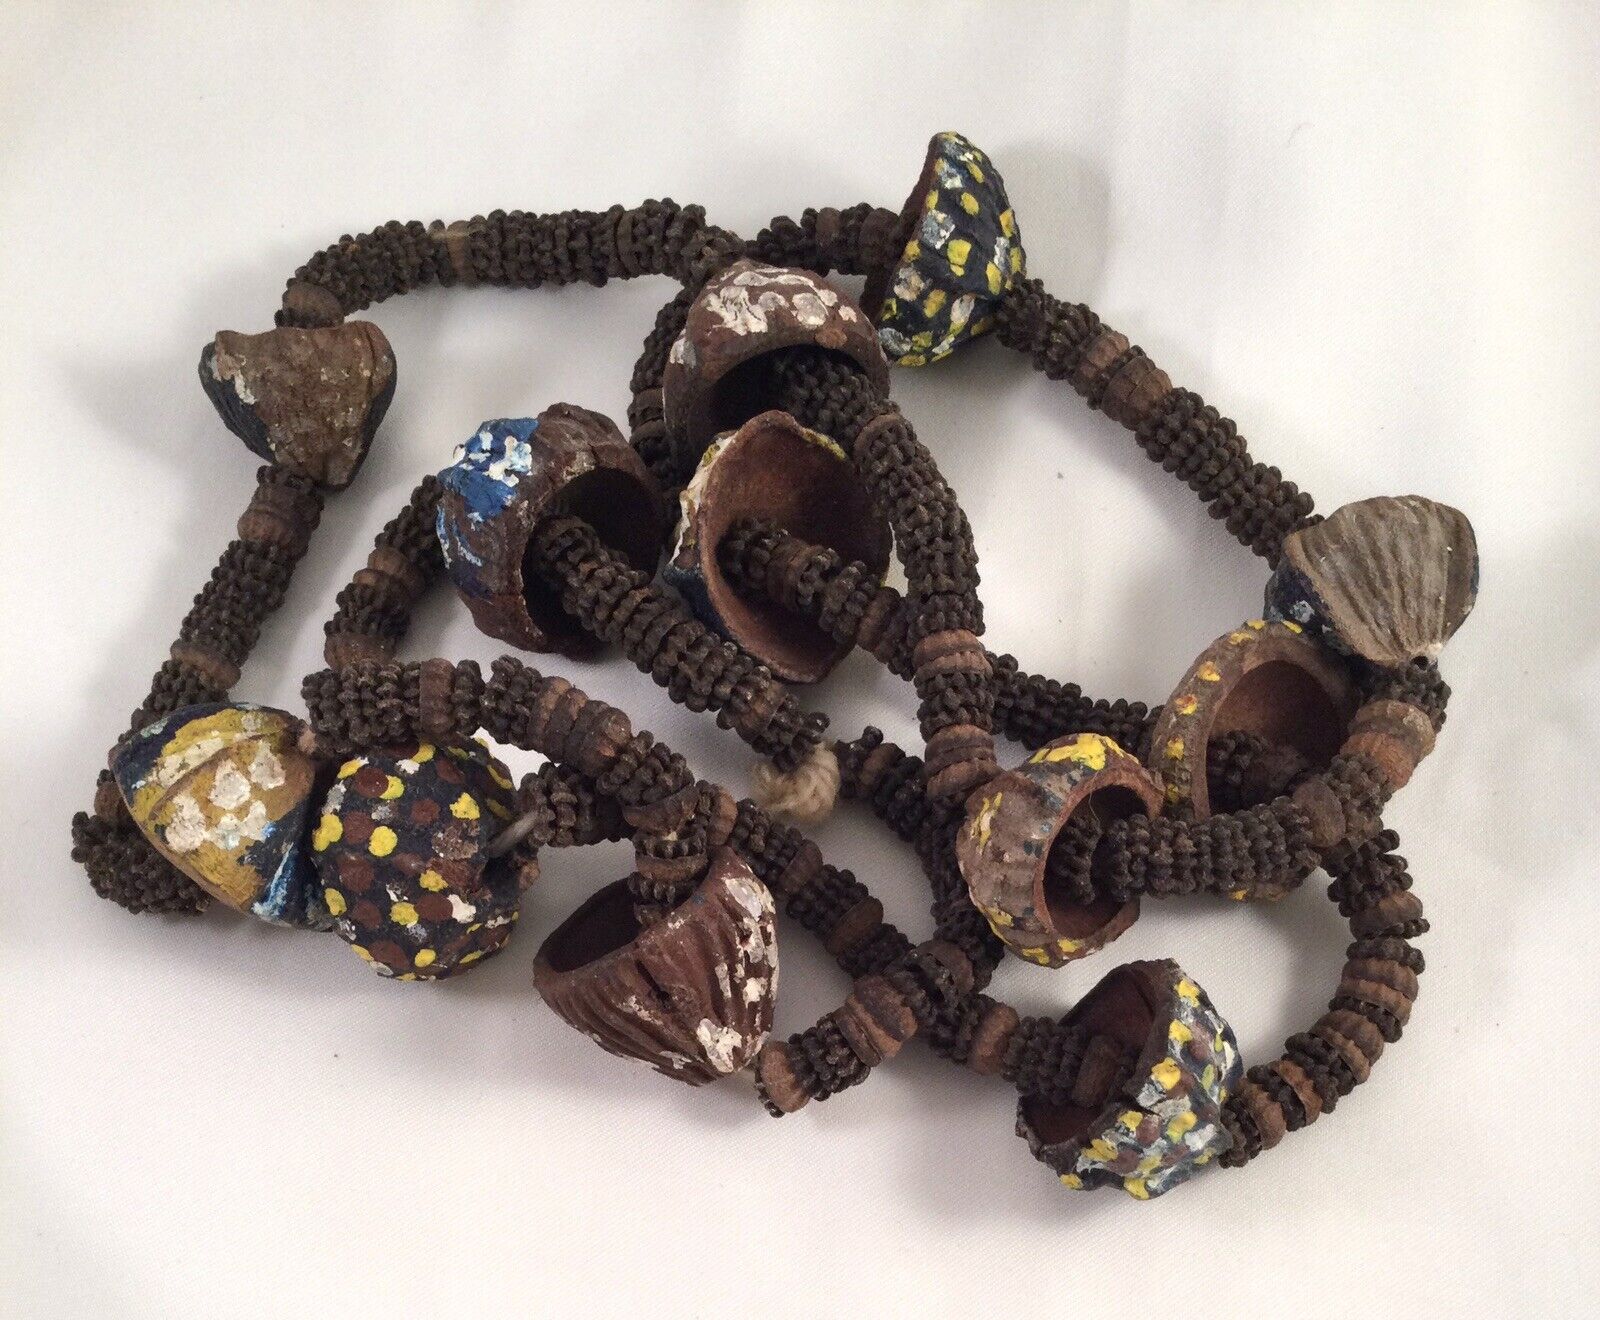 Vintage Australian Indigenous Aboriginal Jewelry Necklace Seed Pods Nut Jewelry